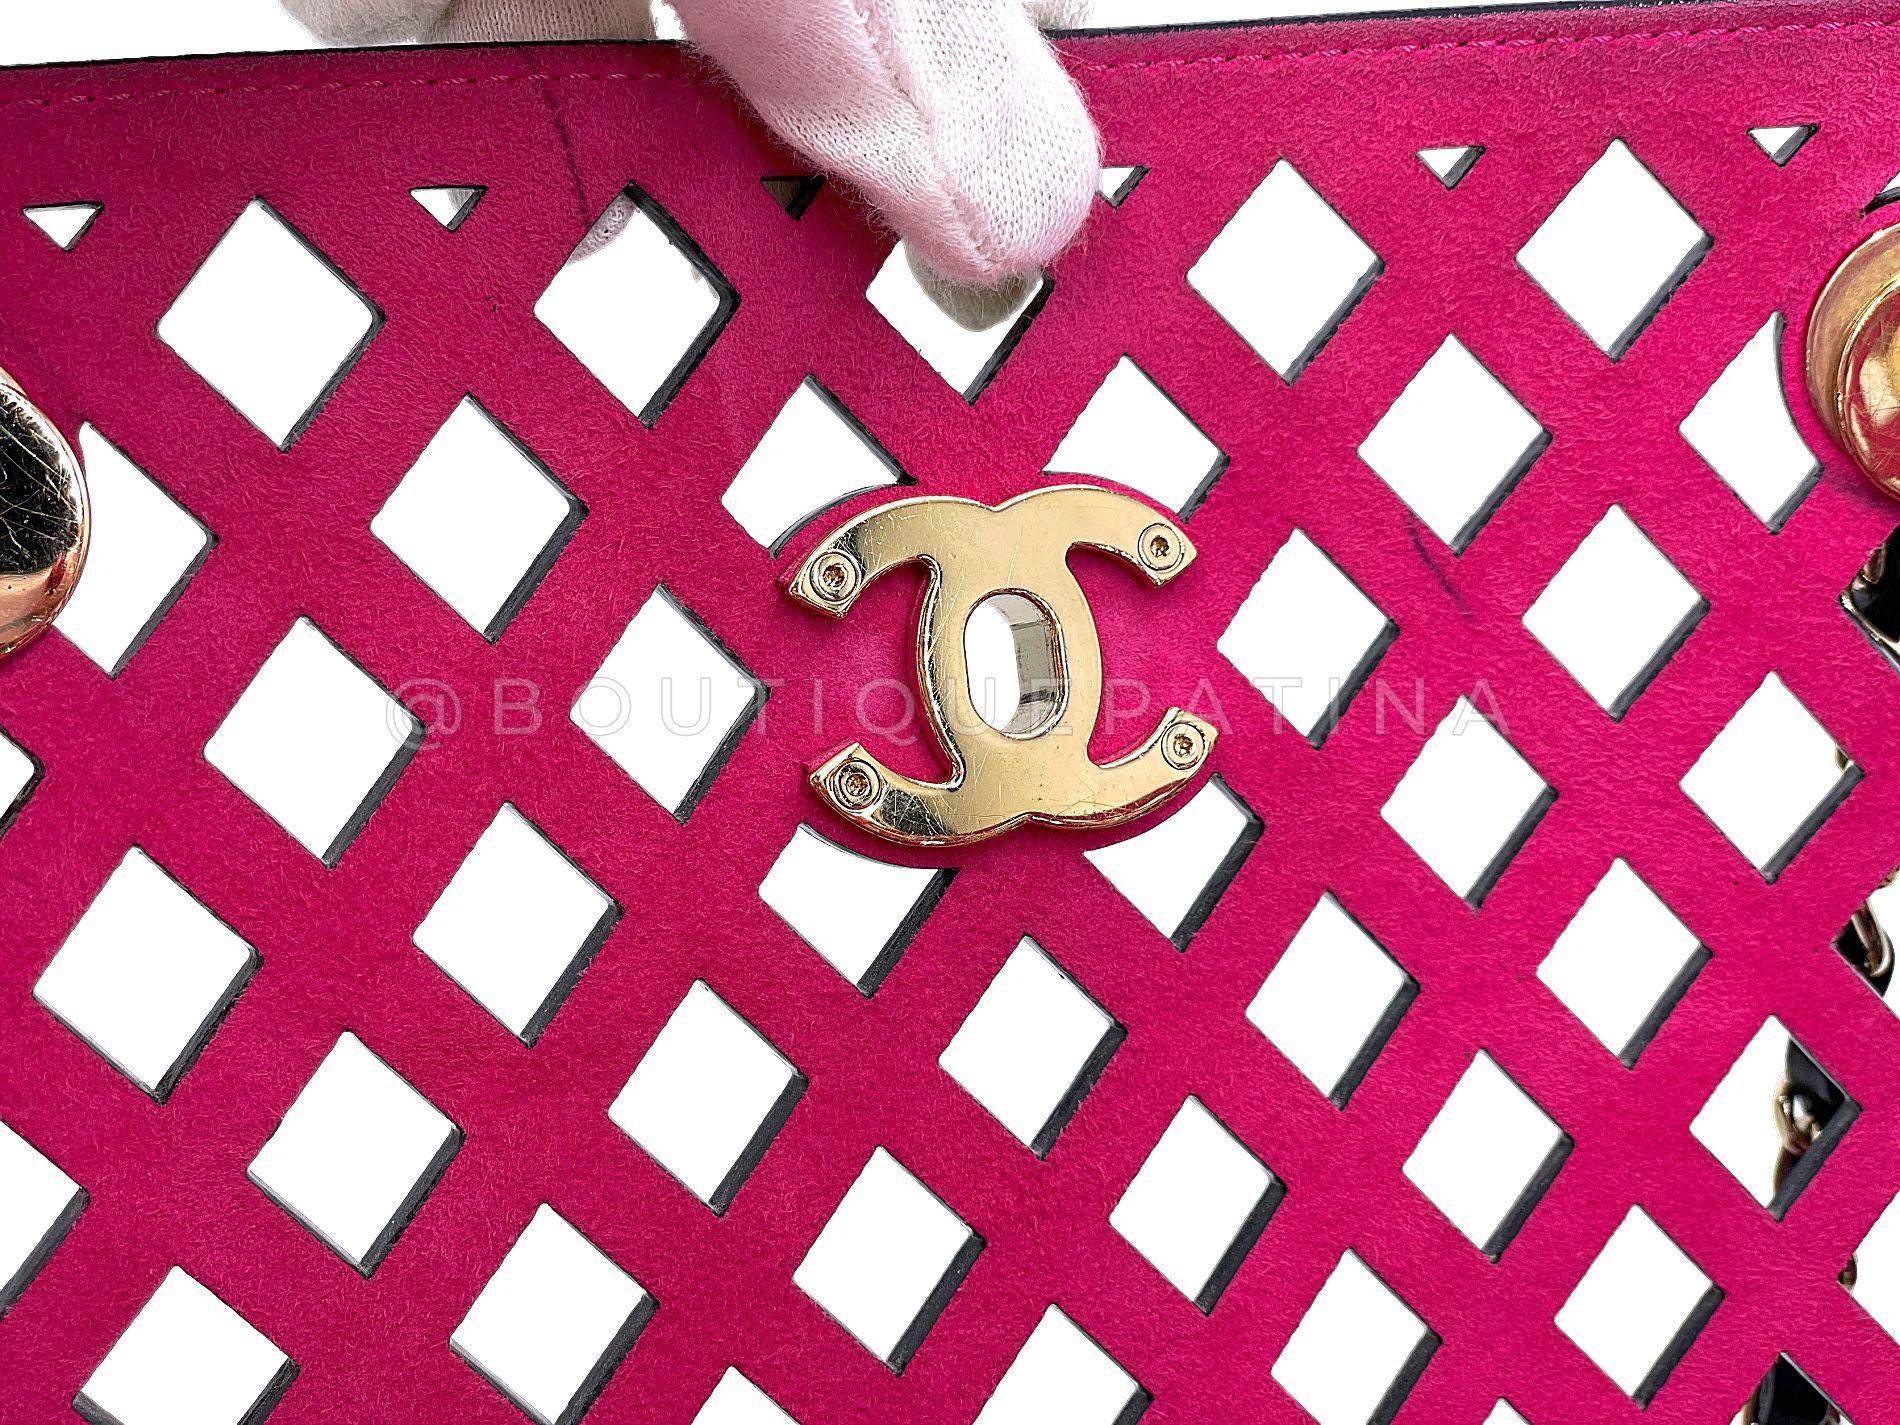 Chanel Black Fuchsia Pink Diamond Cutout Shopper Tote Bag 67861 For Sale 7